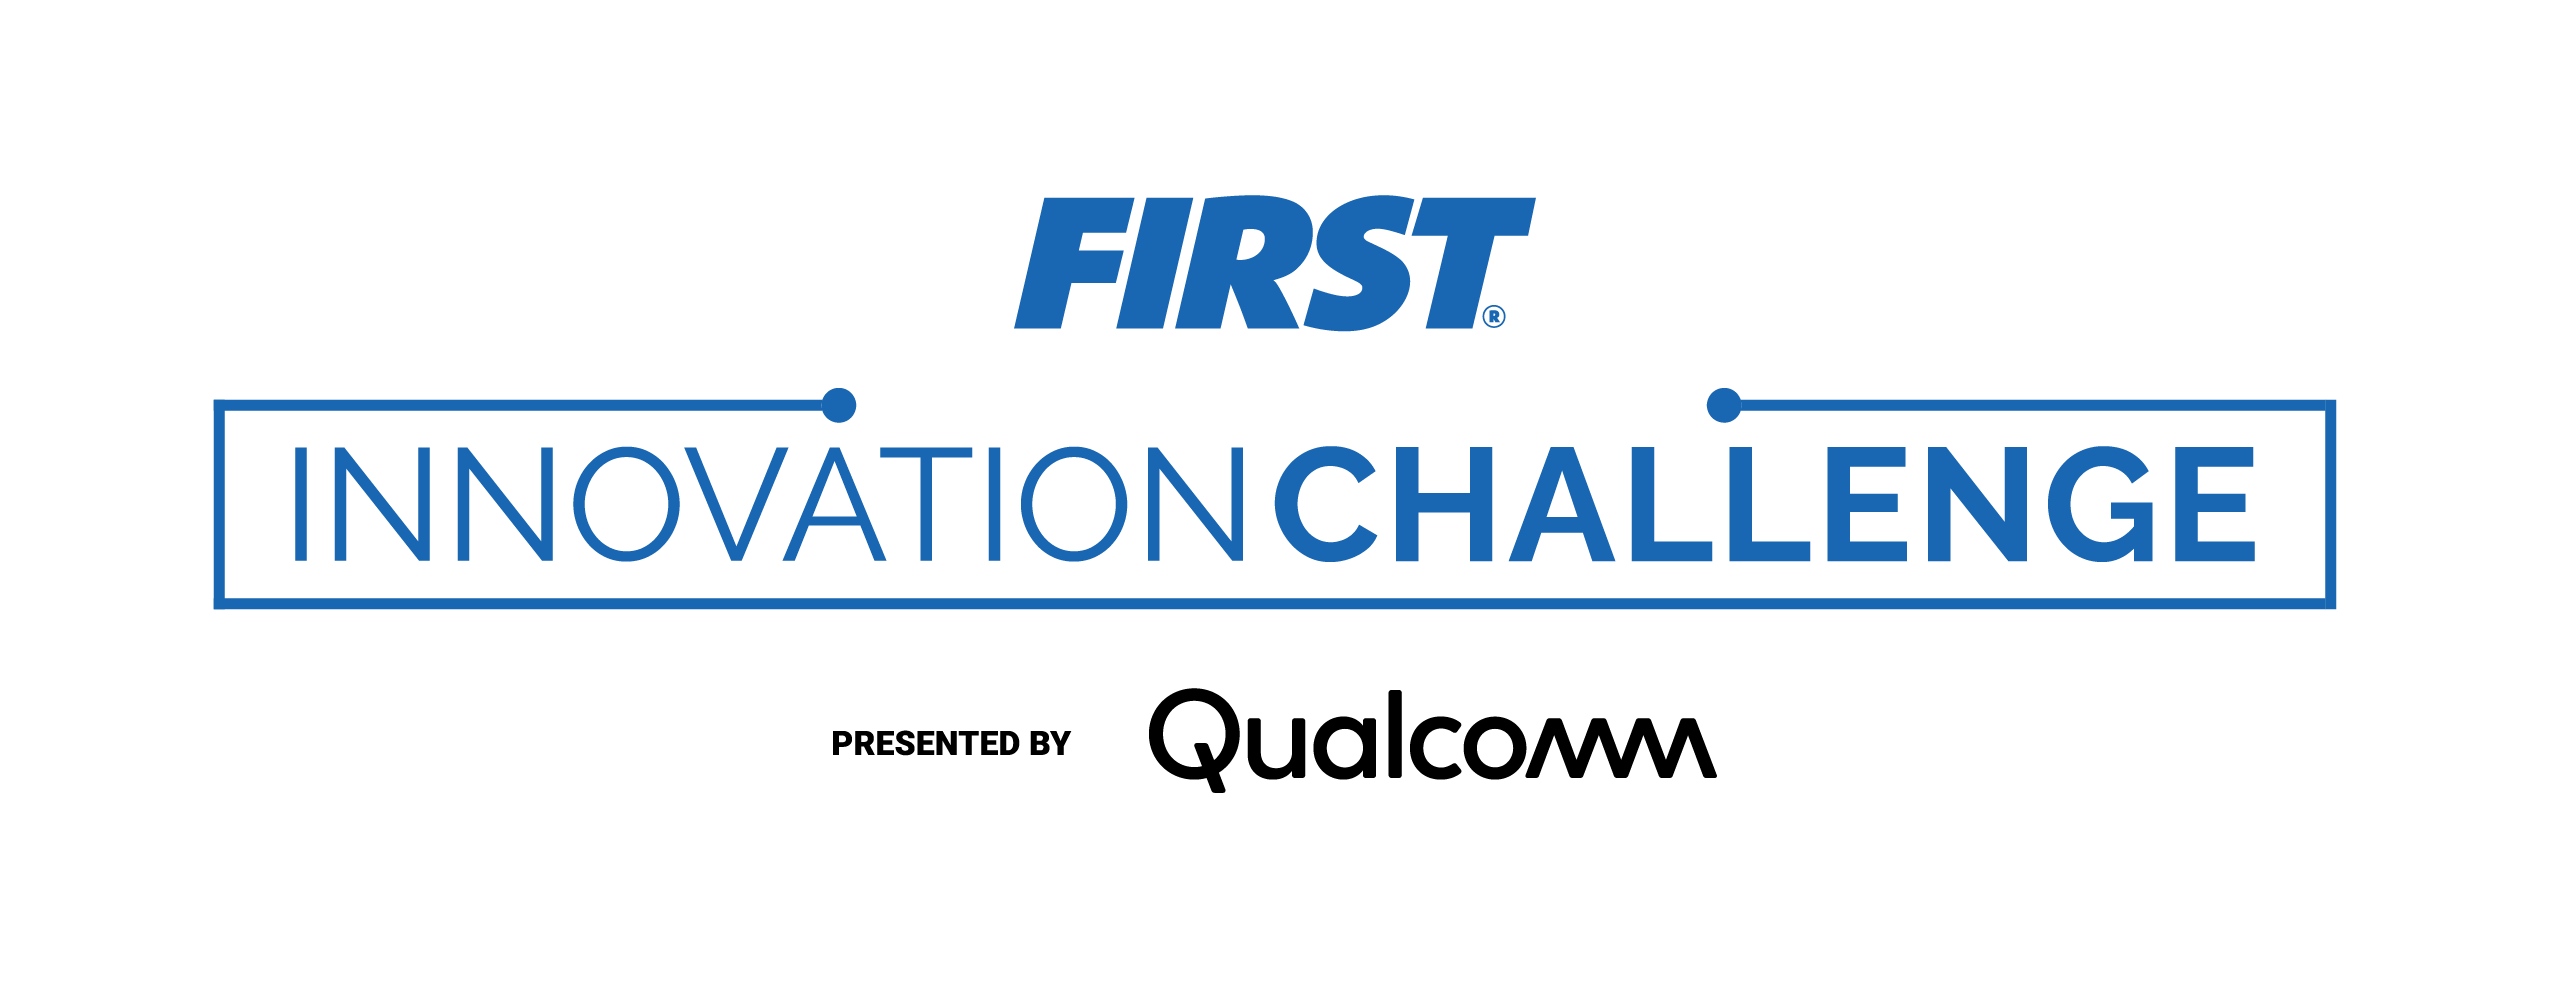 FIRST Innovation Challenge logo